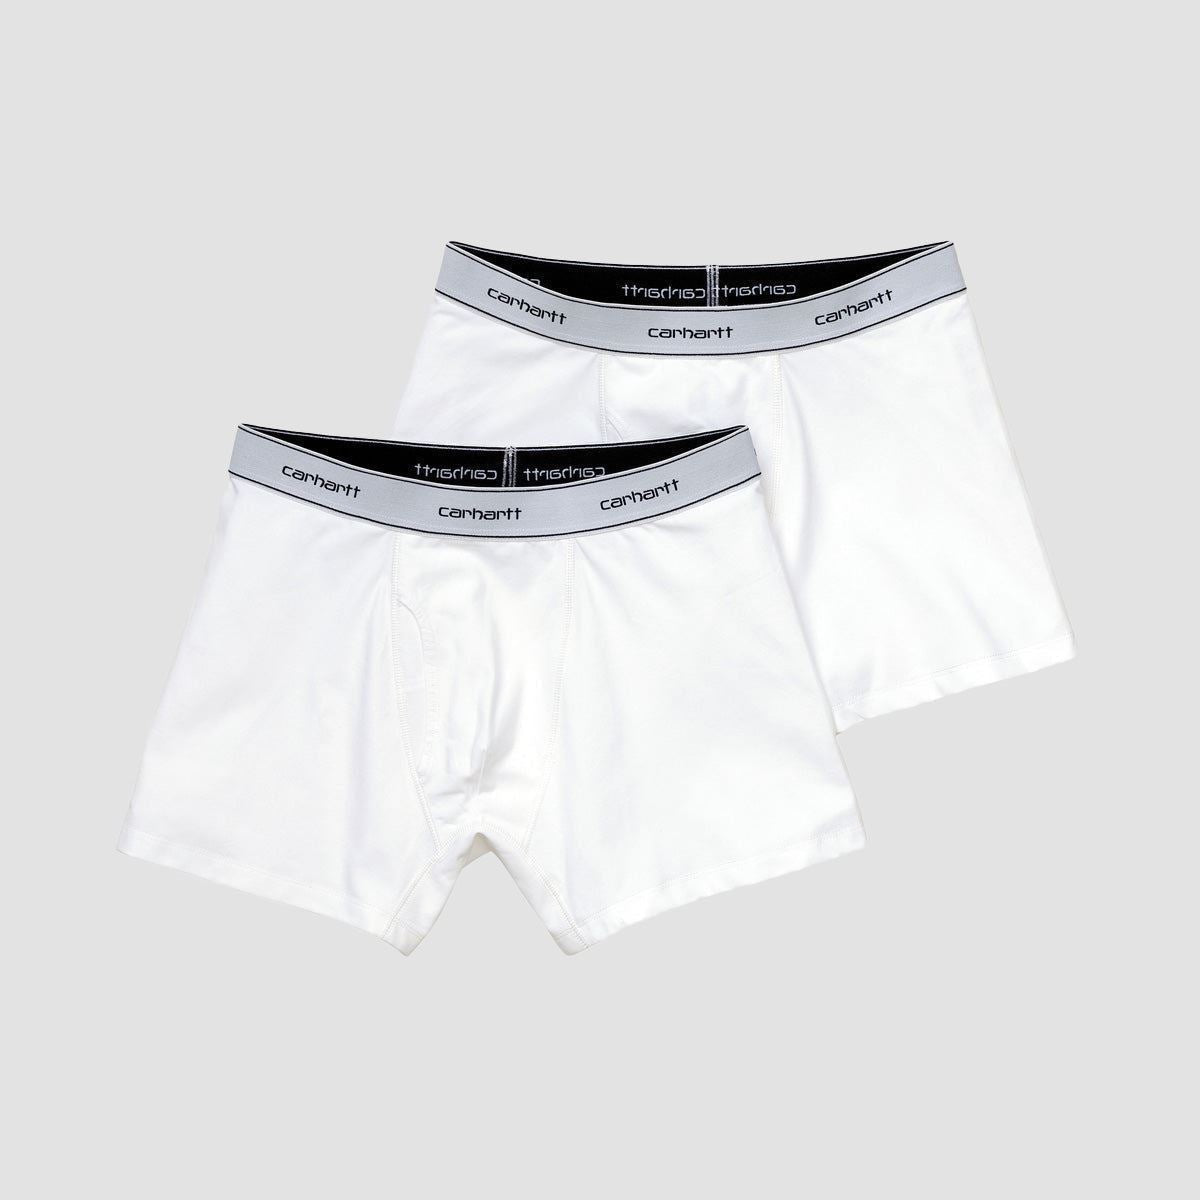 Carhartt WIP Cotton Trunks Boxer Shorts 2 Pack White/White